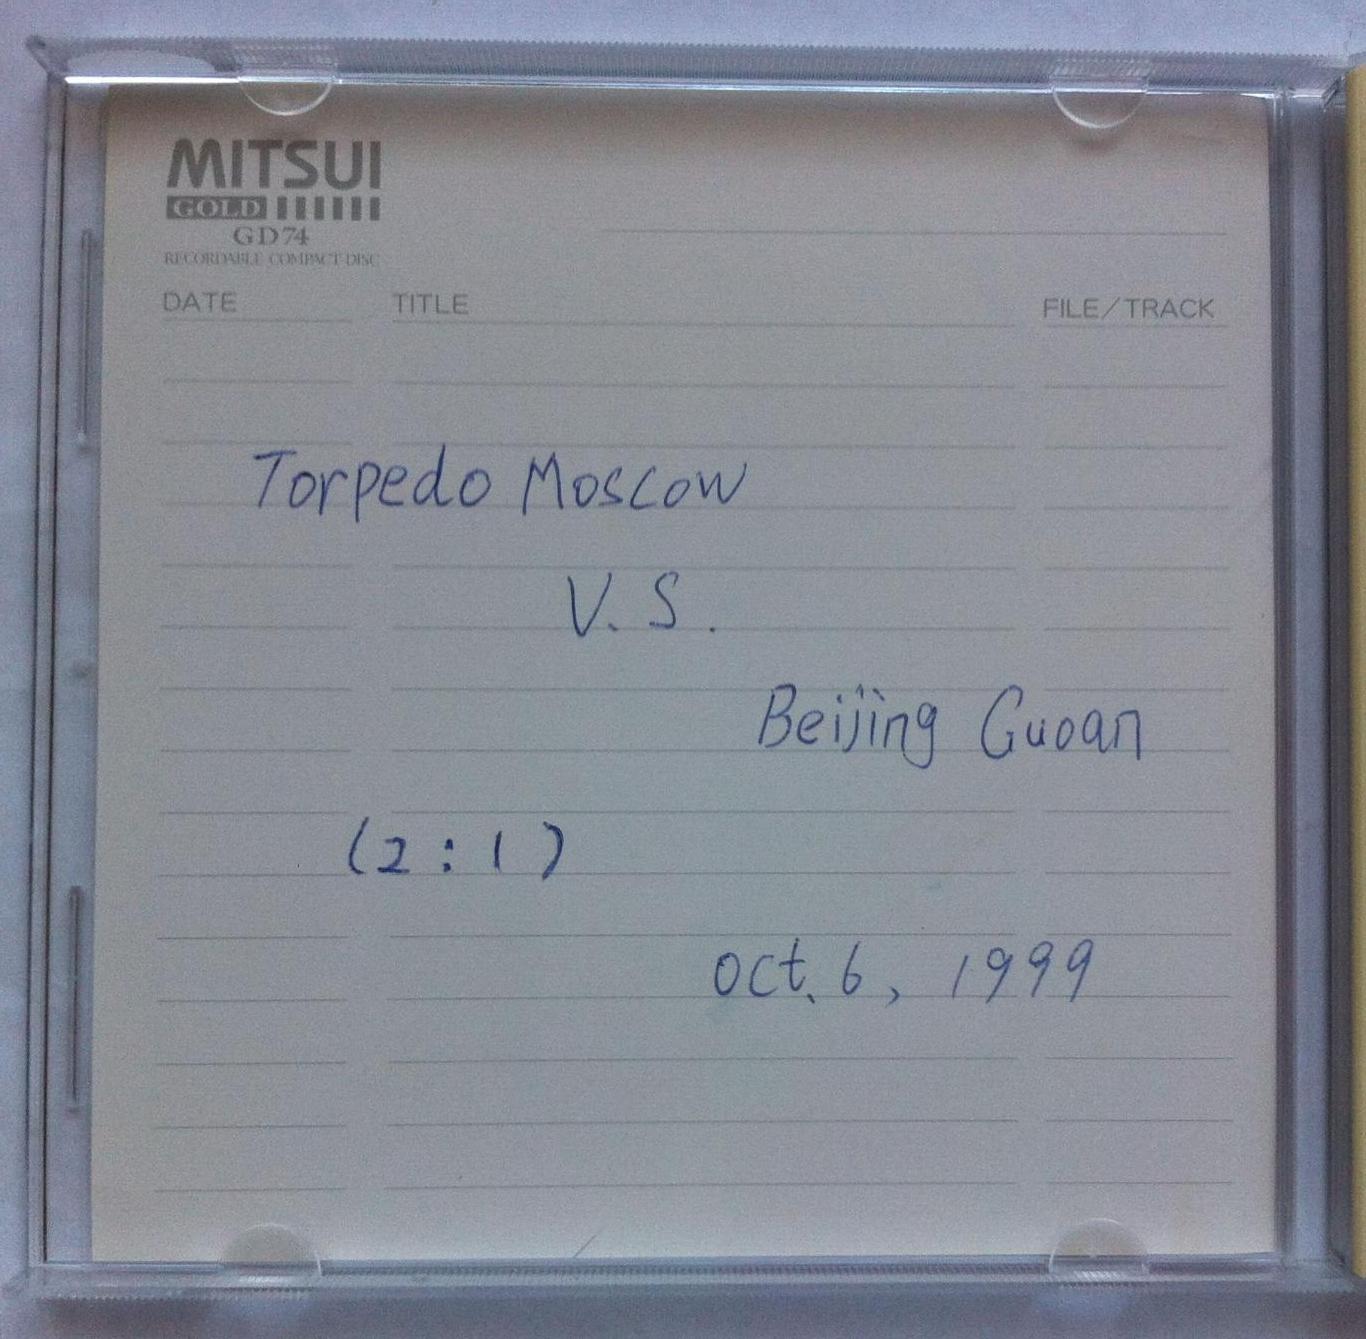 Торпедо Москва. Поездка в Пекин 1999. Компакт-диск CD-R 1